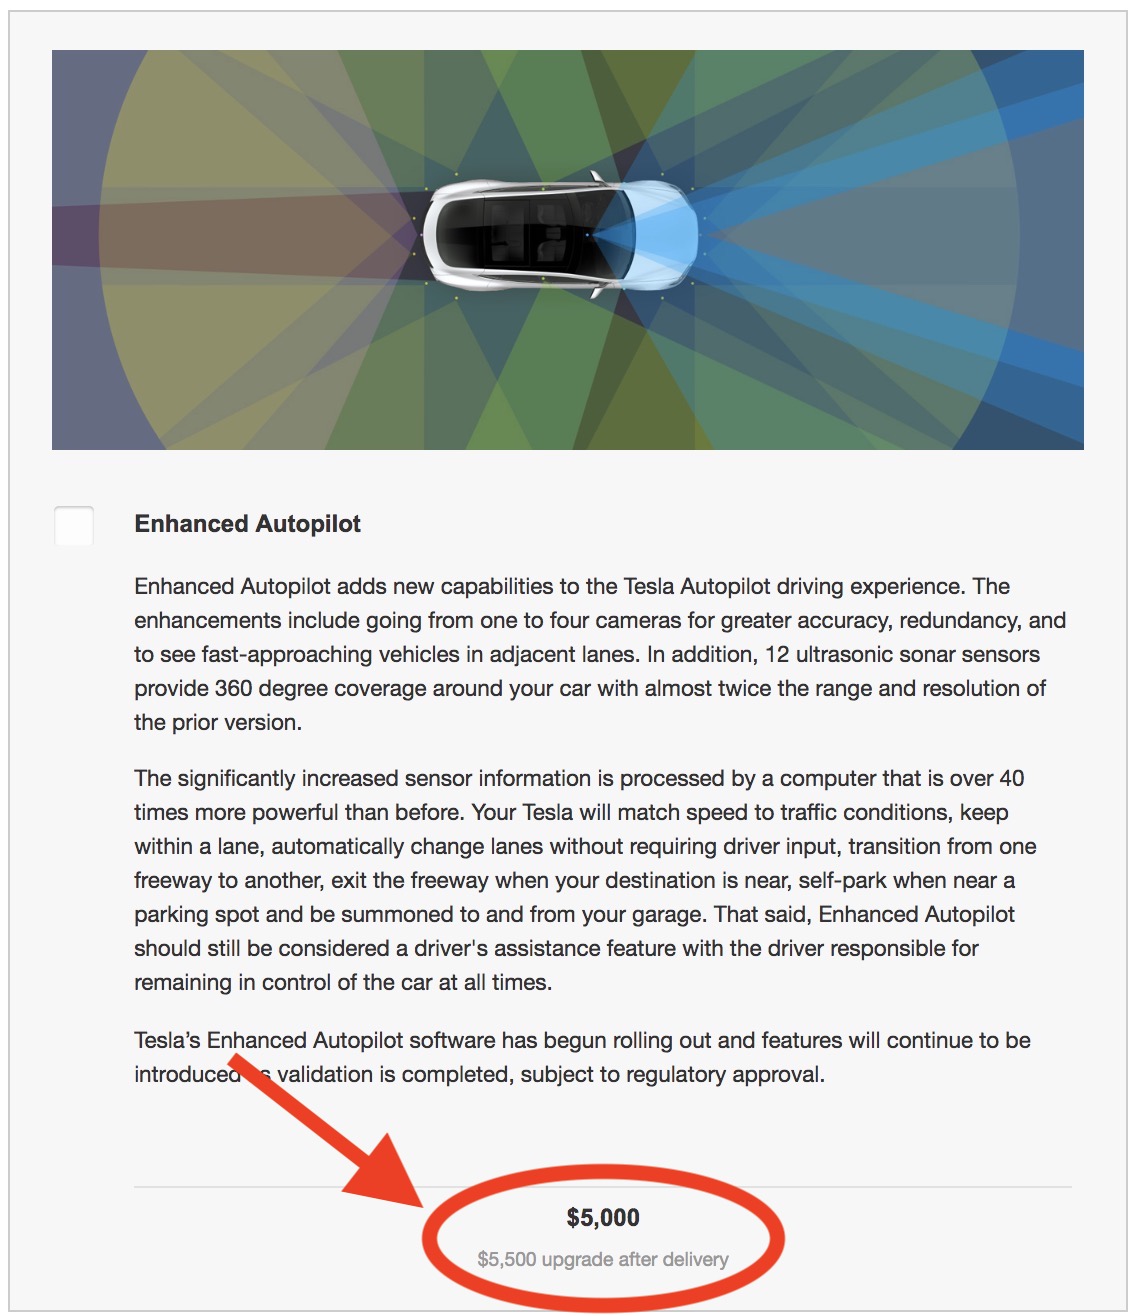 Tesla Decreases The Price Of Enhanced Autopilot After